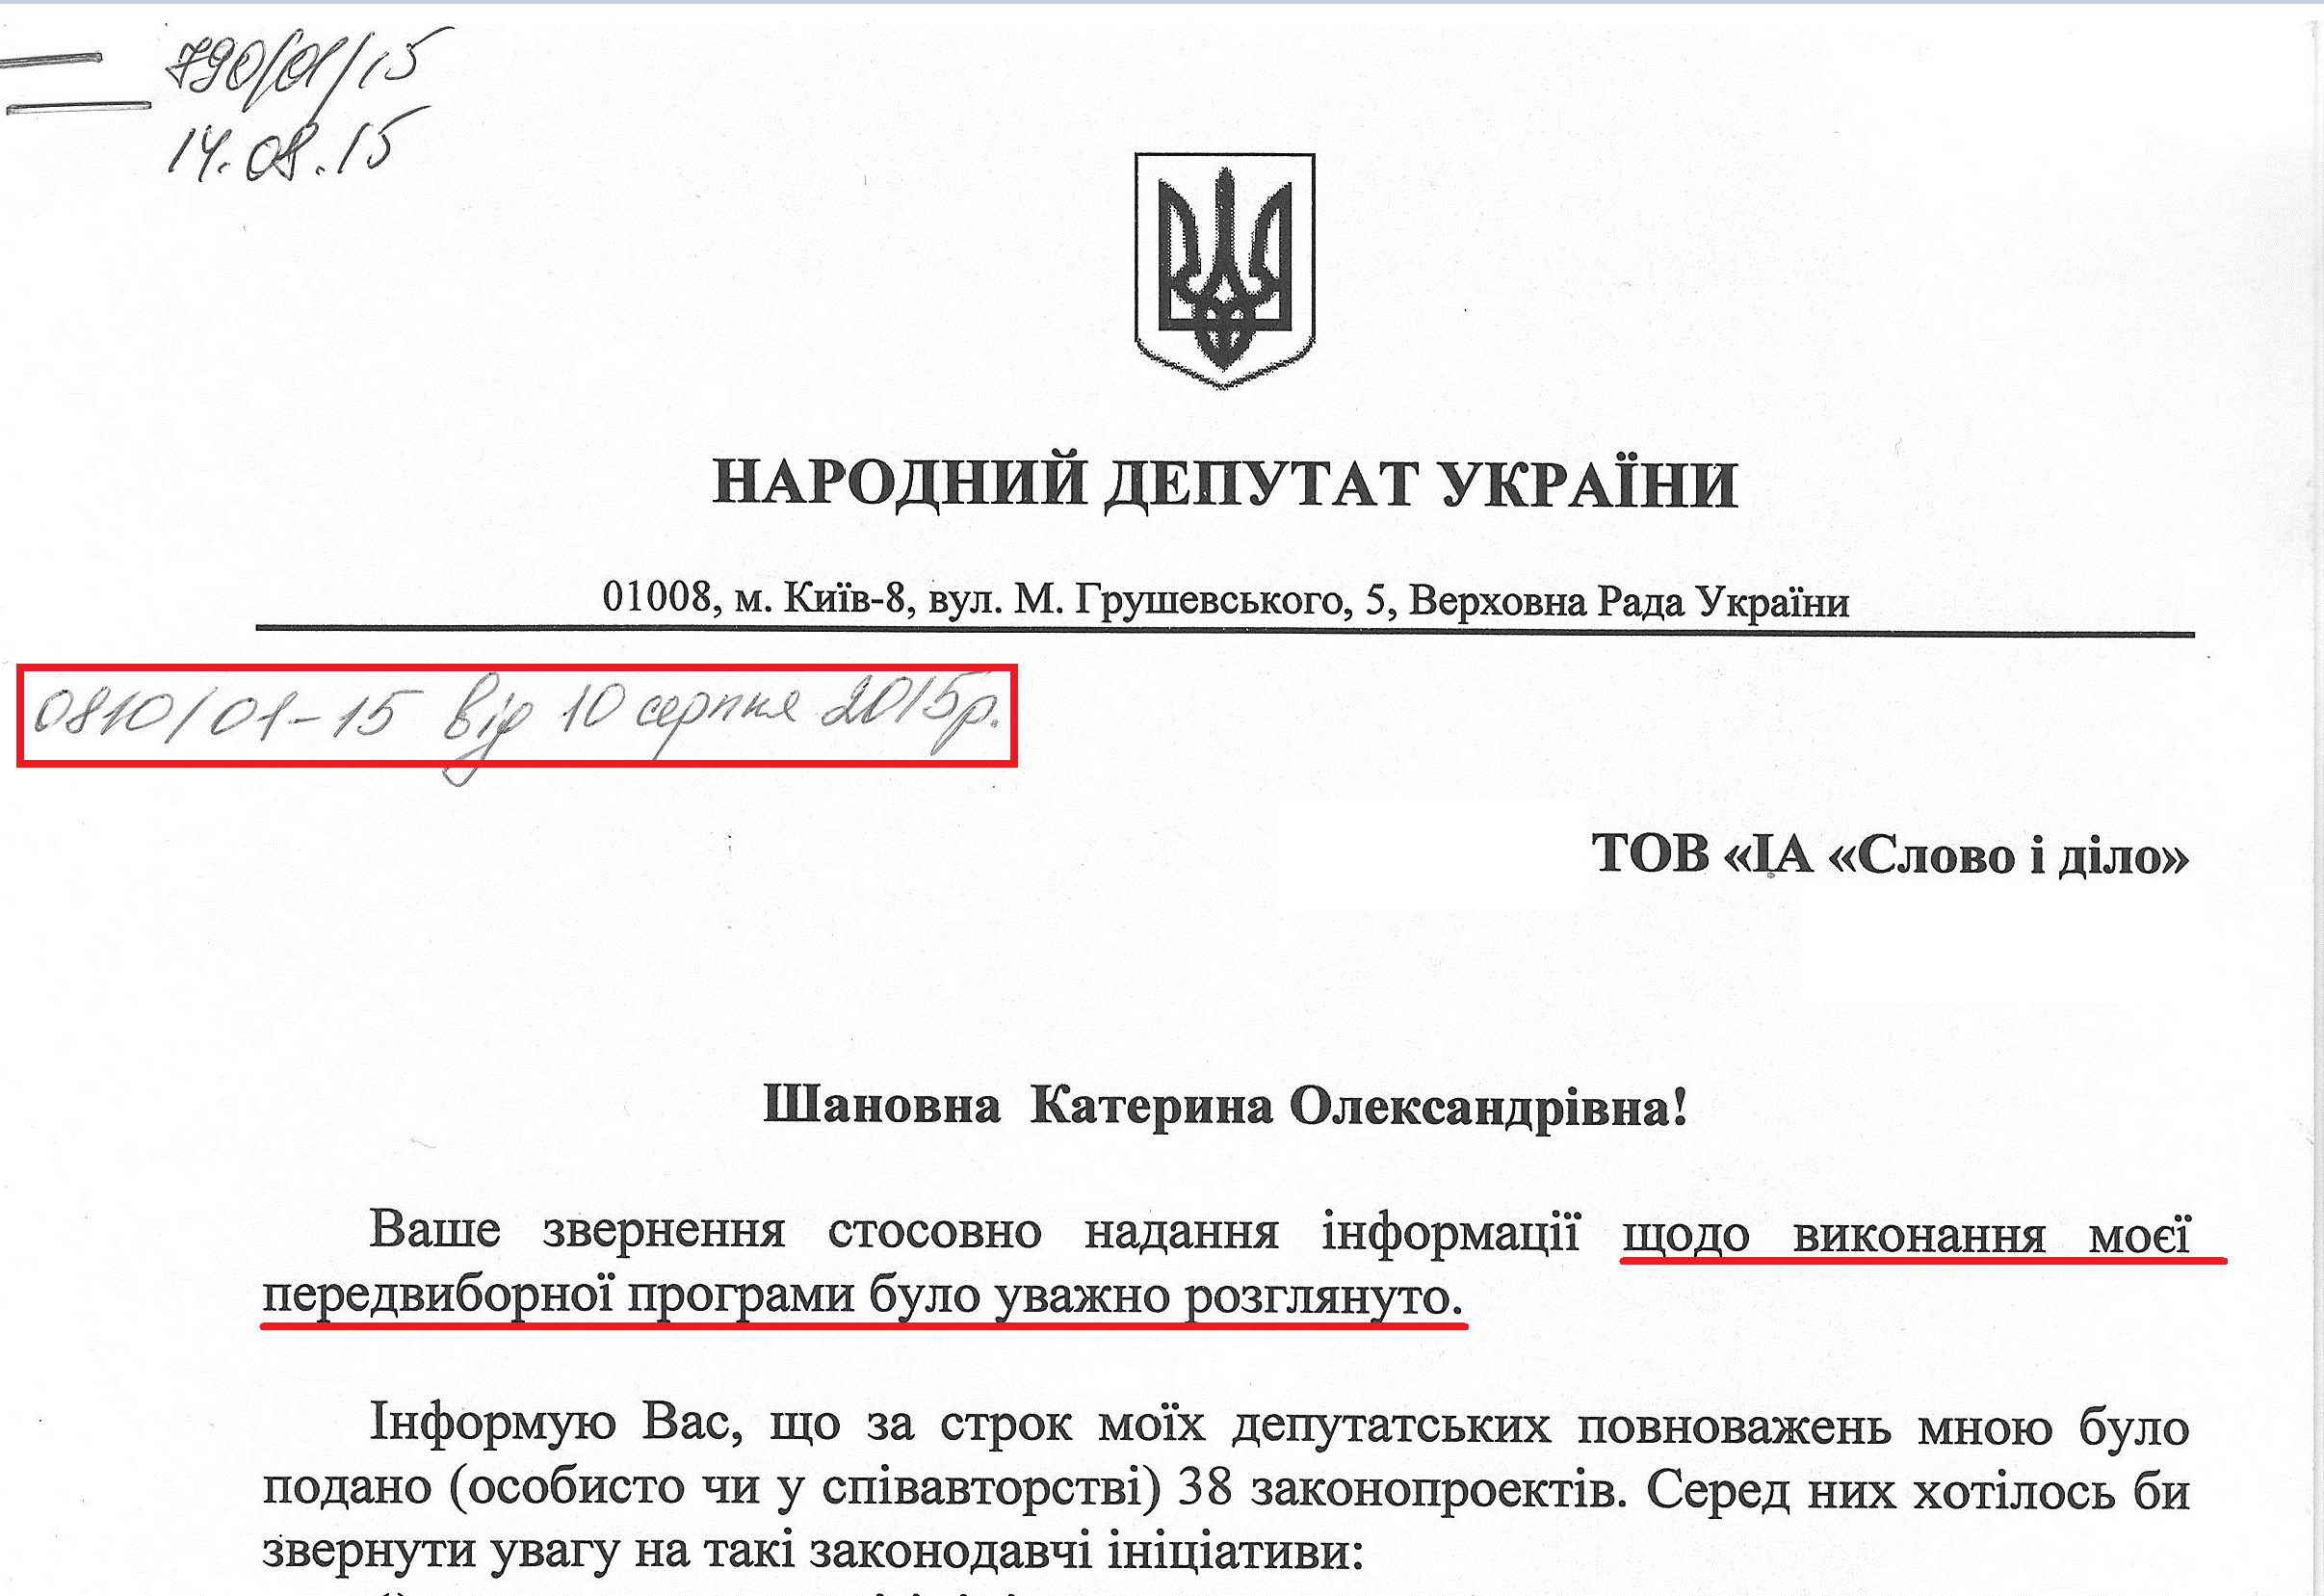 http://www.president.gov.ua/documents/6902014-17590